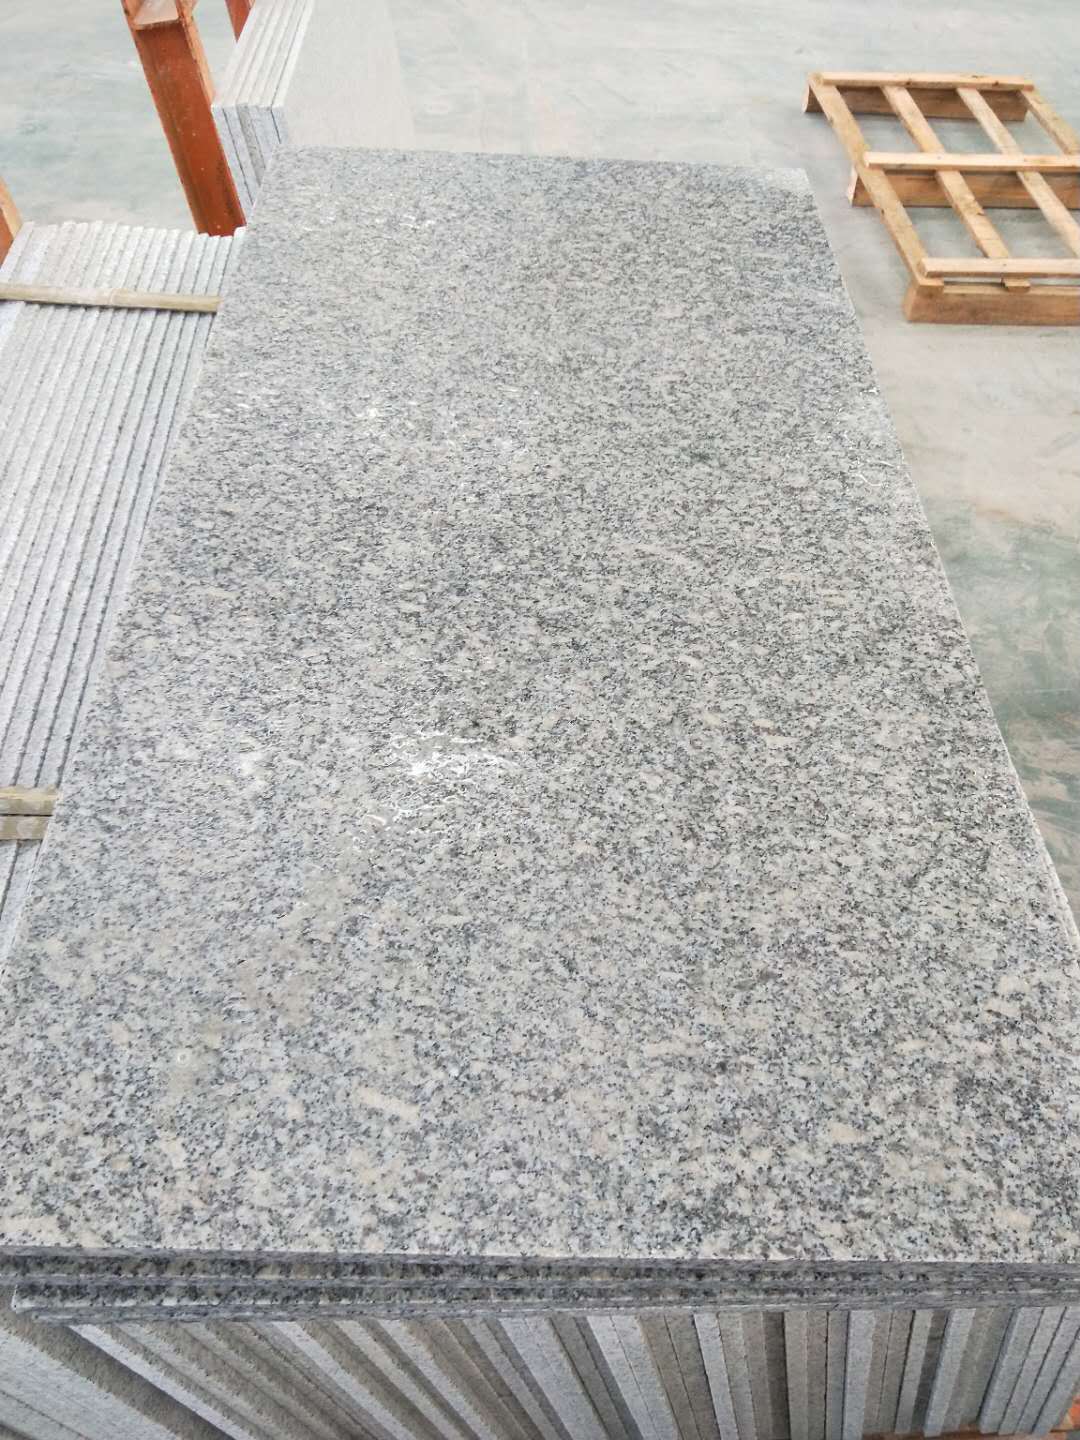 G602HB Grey Granite Slabs Light Grey Tiles